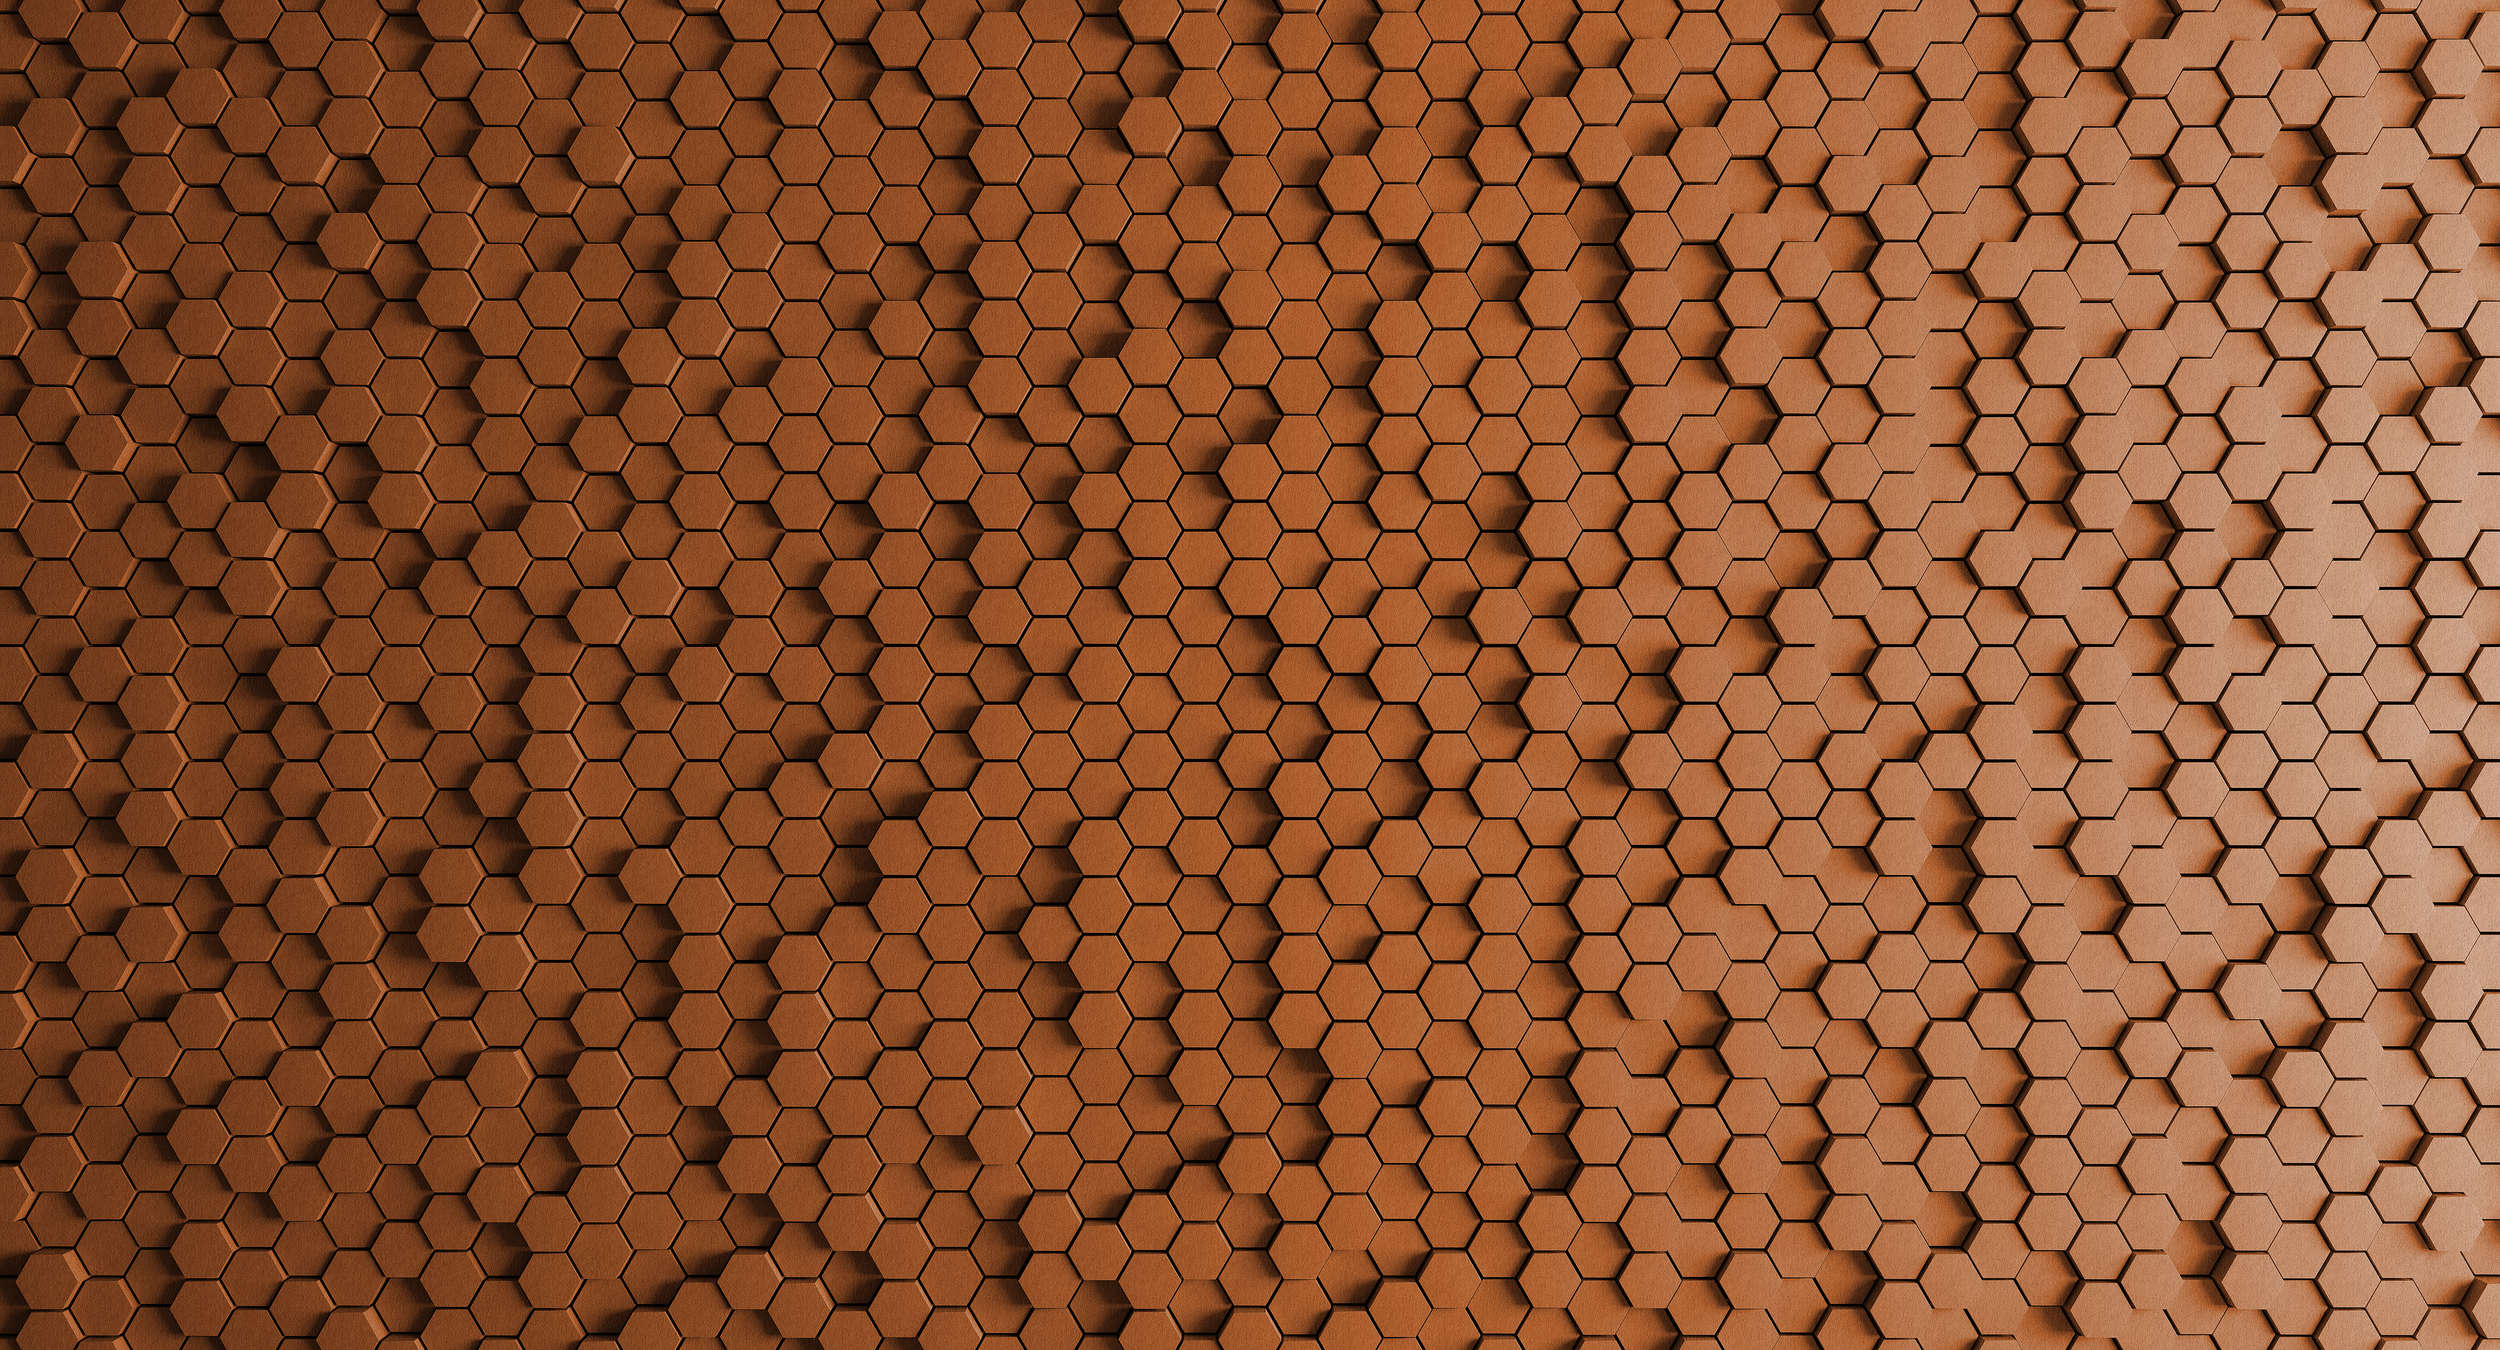             Honeycomb 2 - 3D Fototapete mit orangenem Wabendesign - Struktur Filz – Kupfer, Orange | Perlmutt Glattvlies
        